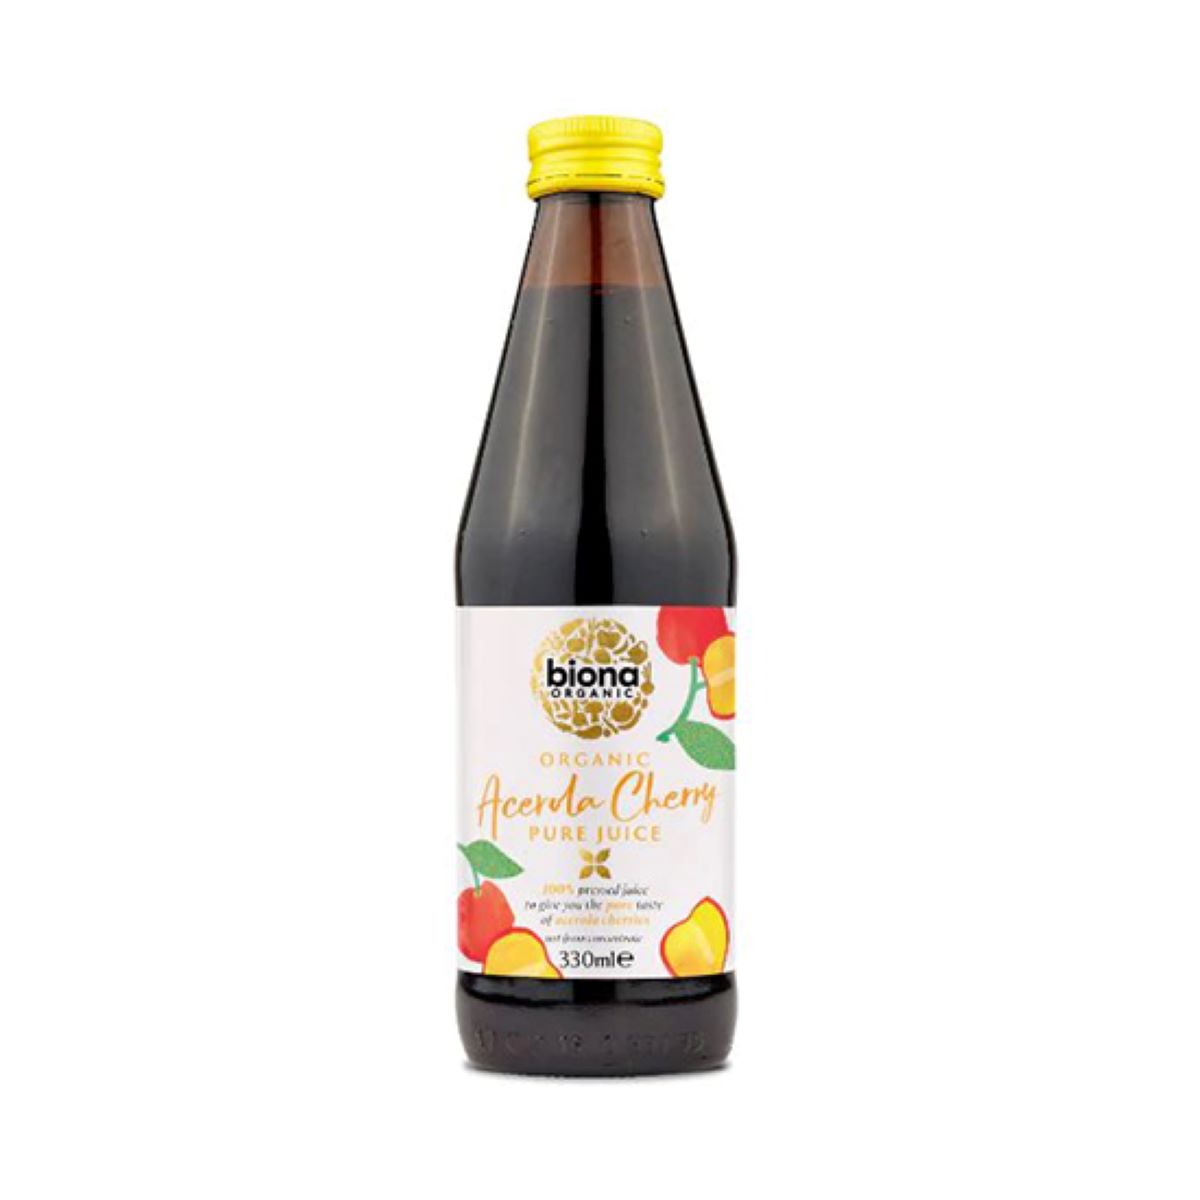 Biona Organic Acerola Cherry Pure Juice 330ml